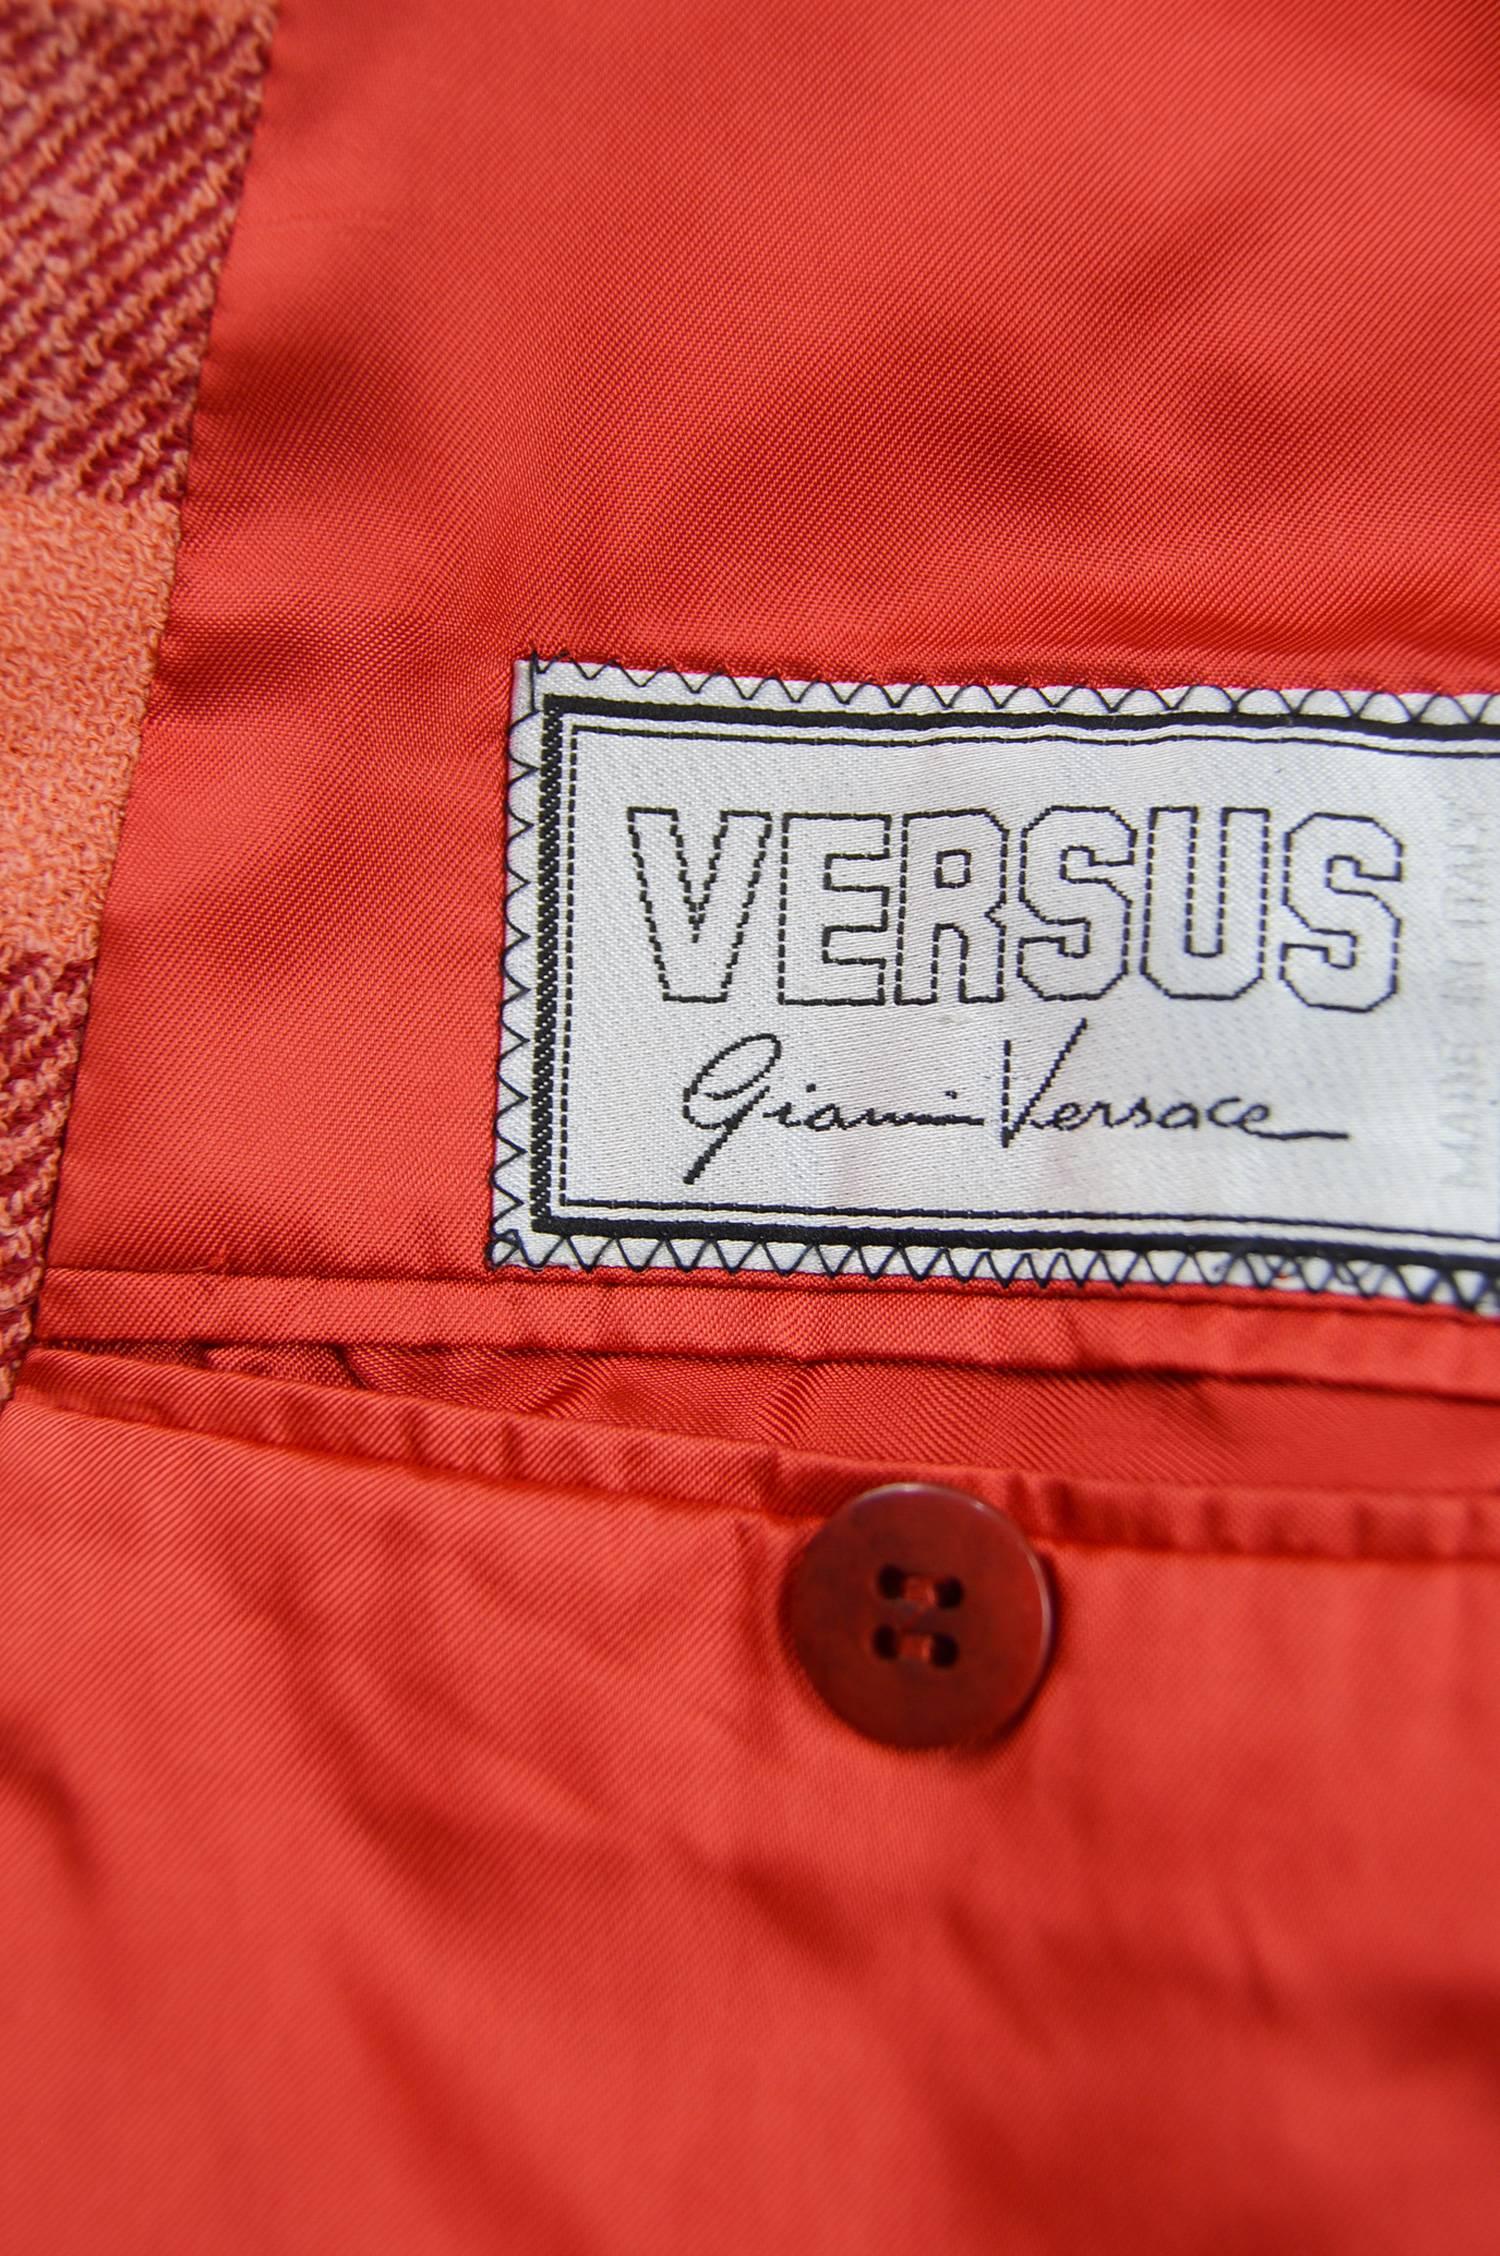 Gianni Versace Versus Men's Vintage Plaid Blazer, 1990s 5